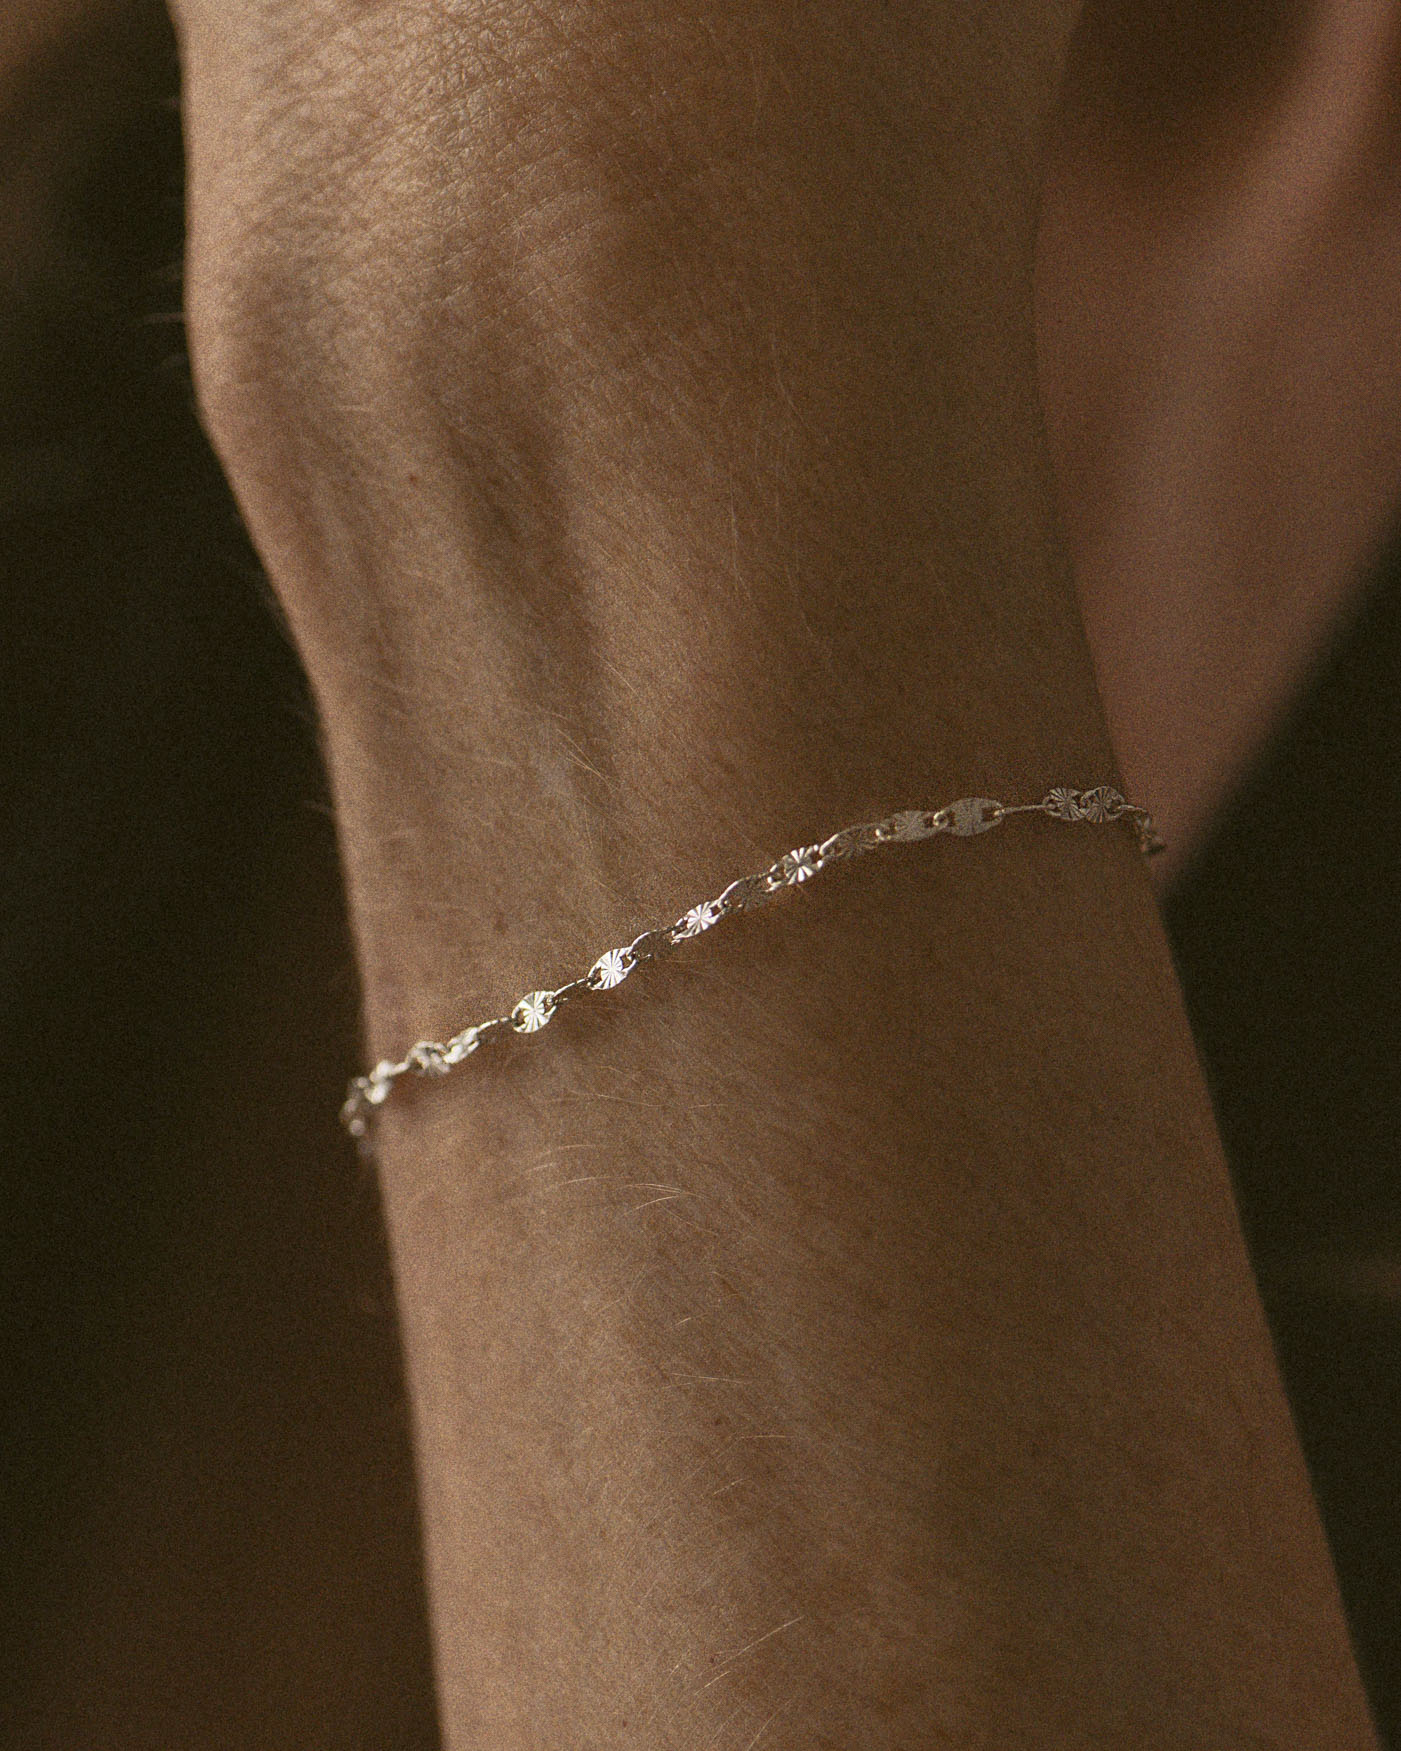 Sol silver bracelet